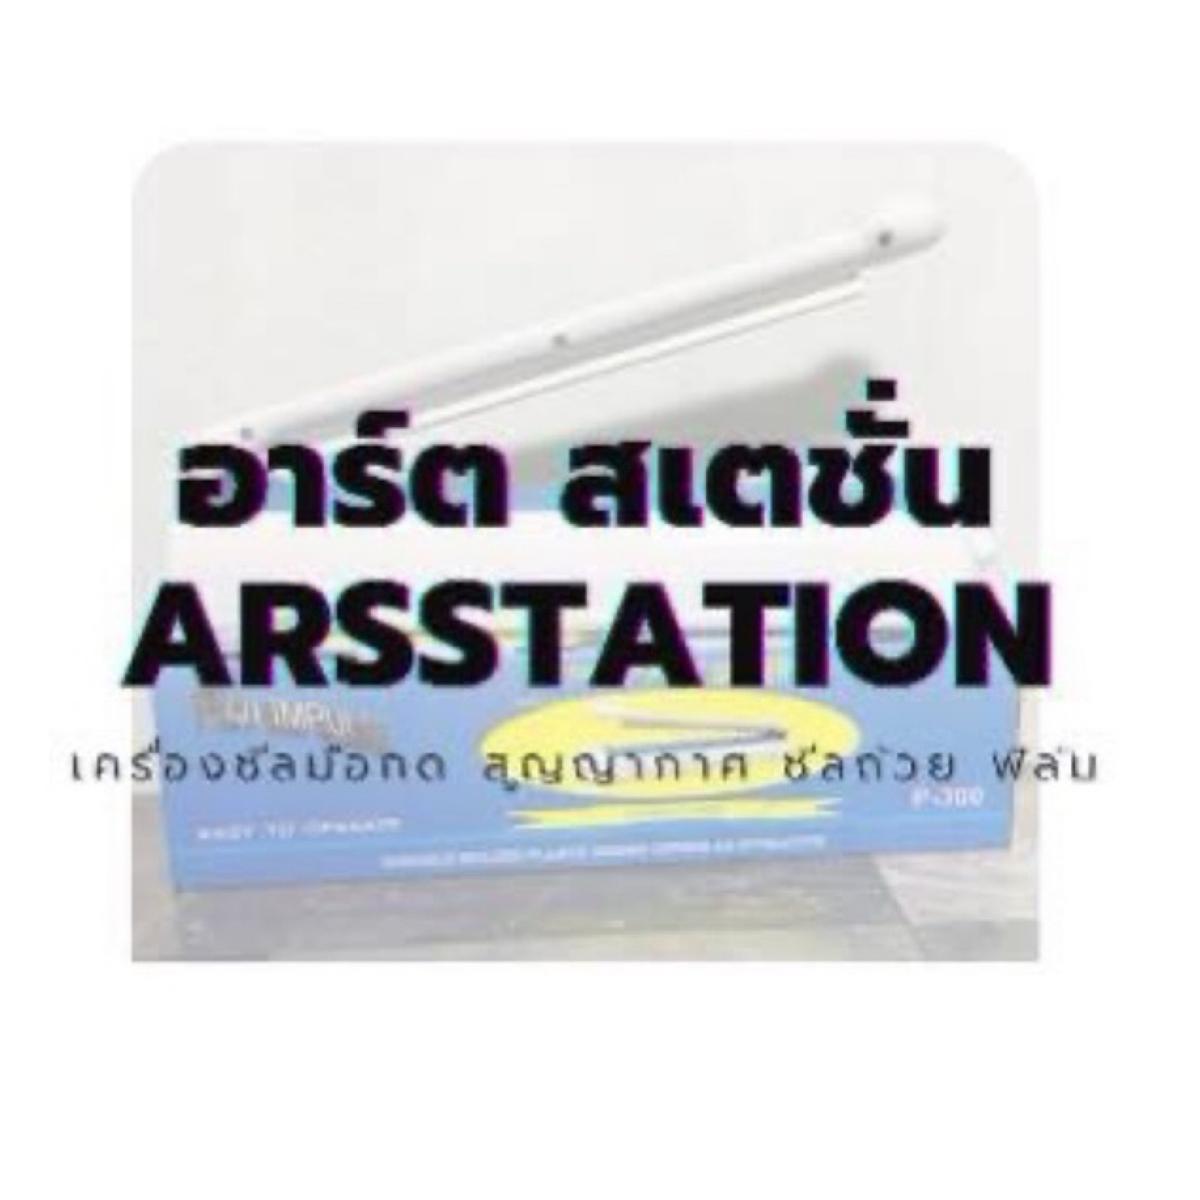 Arsstation